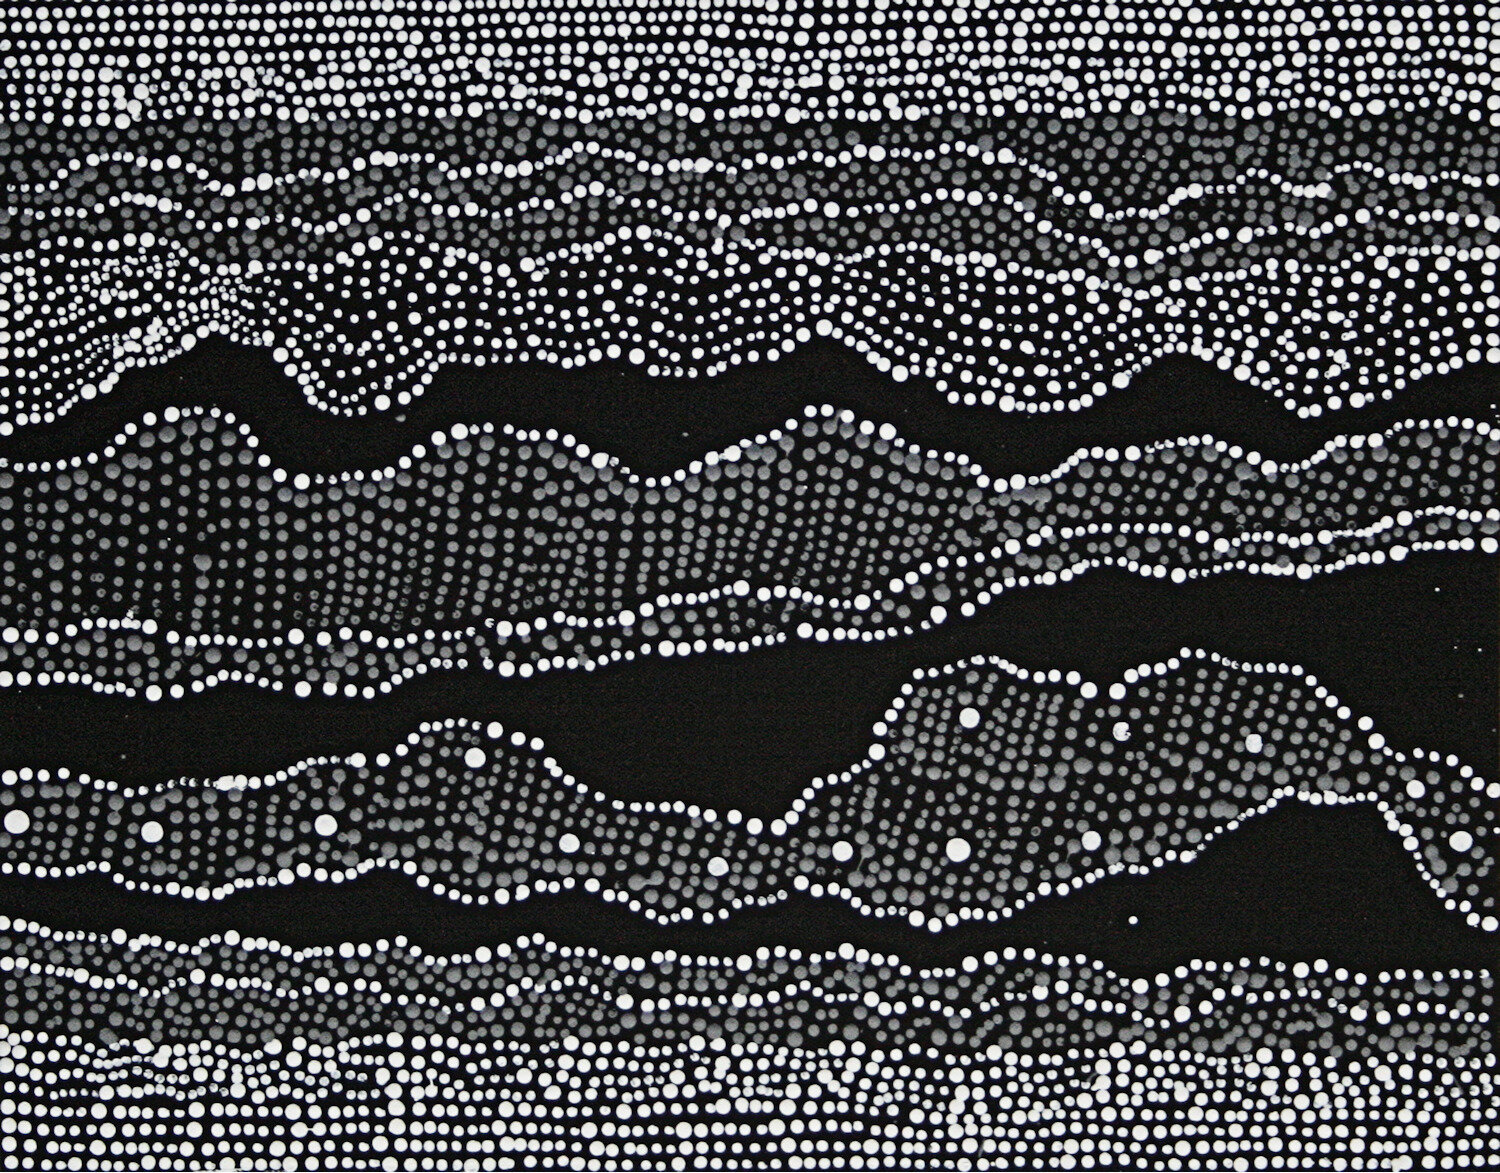 Pirlinyanu, 2009 by Julie Nangala Robertson
40x51cm Stretched canvas on frame, Cat 13947JR